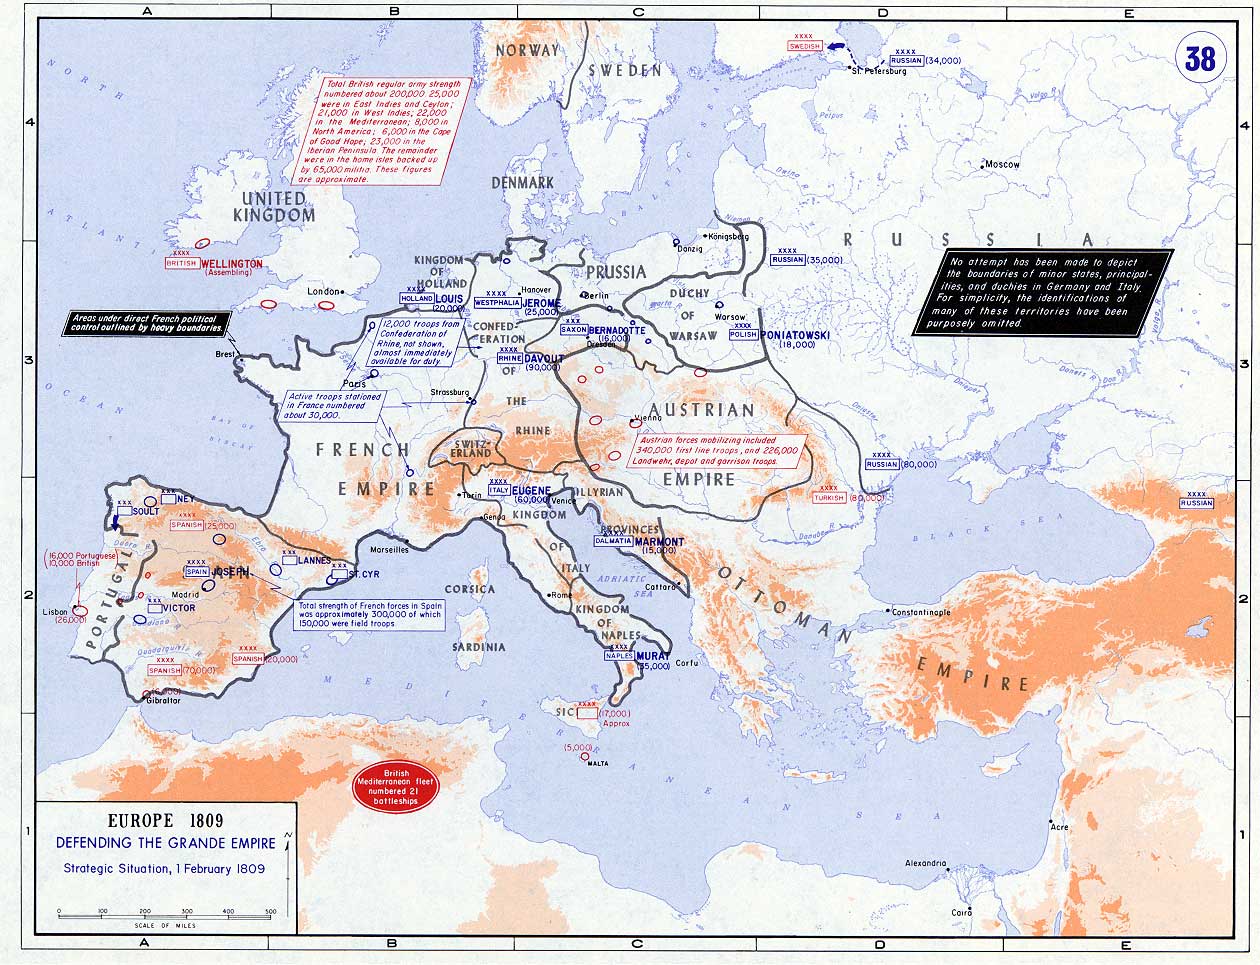 strategic_situation_of_europe_1809.jpg